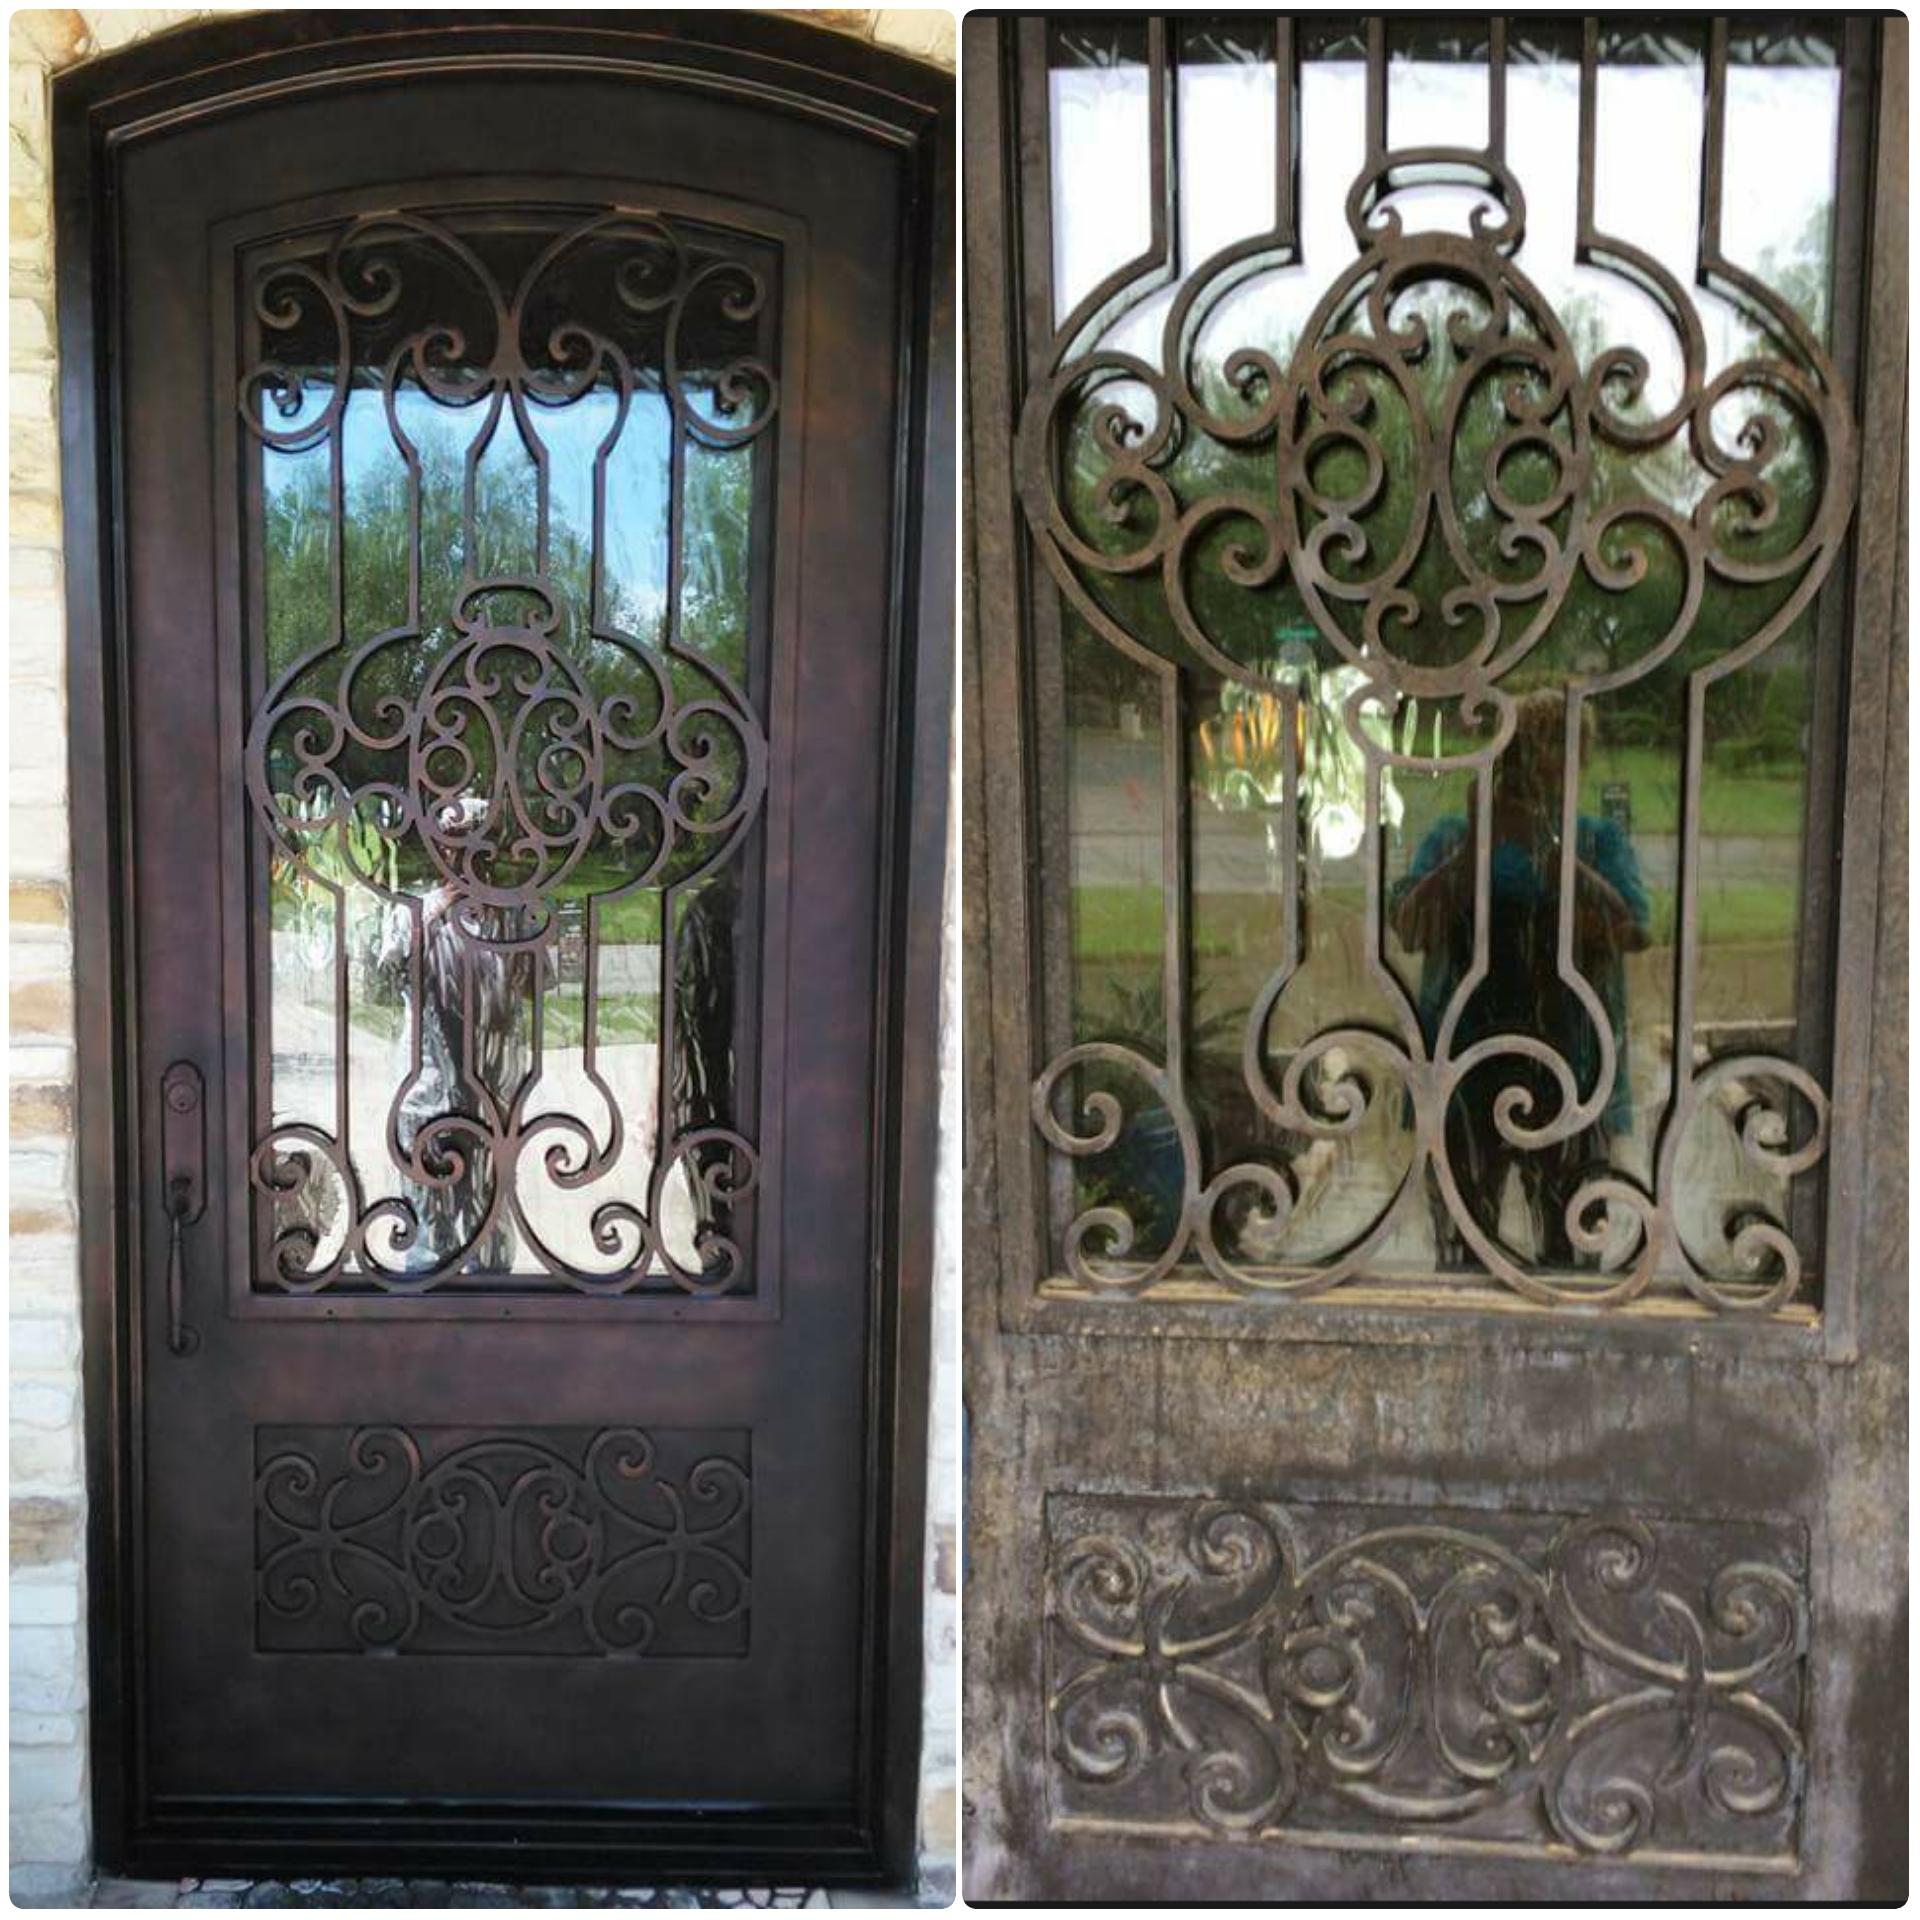 Dont replace- repair your wrought iron door